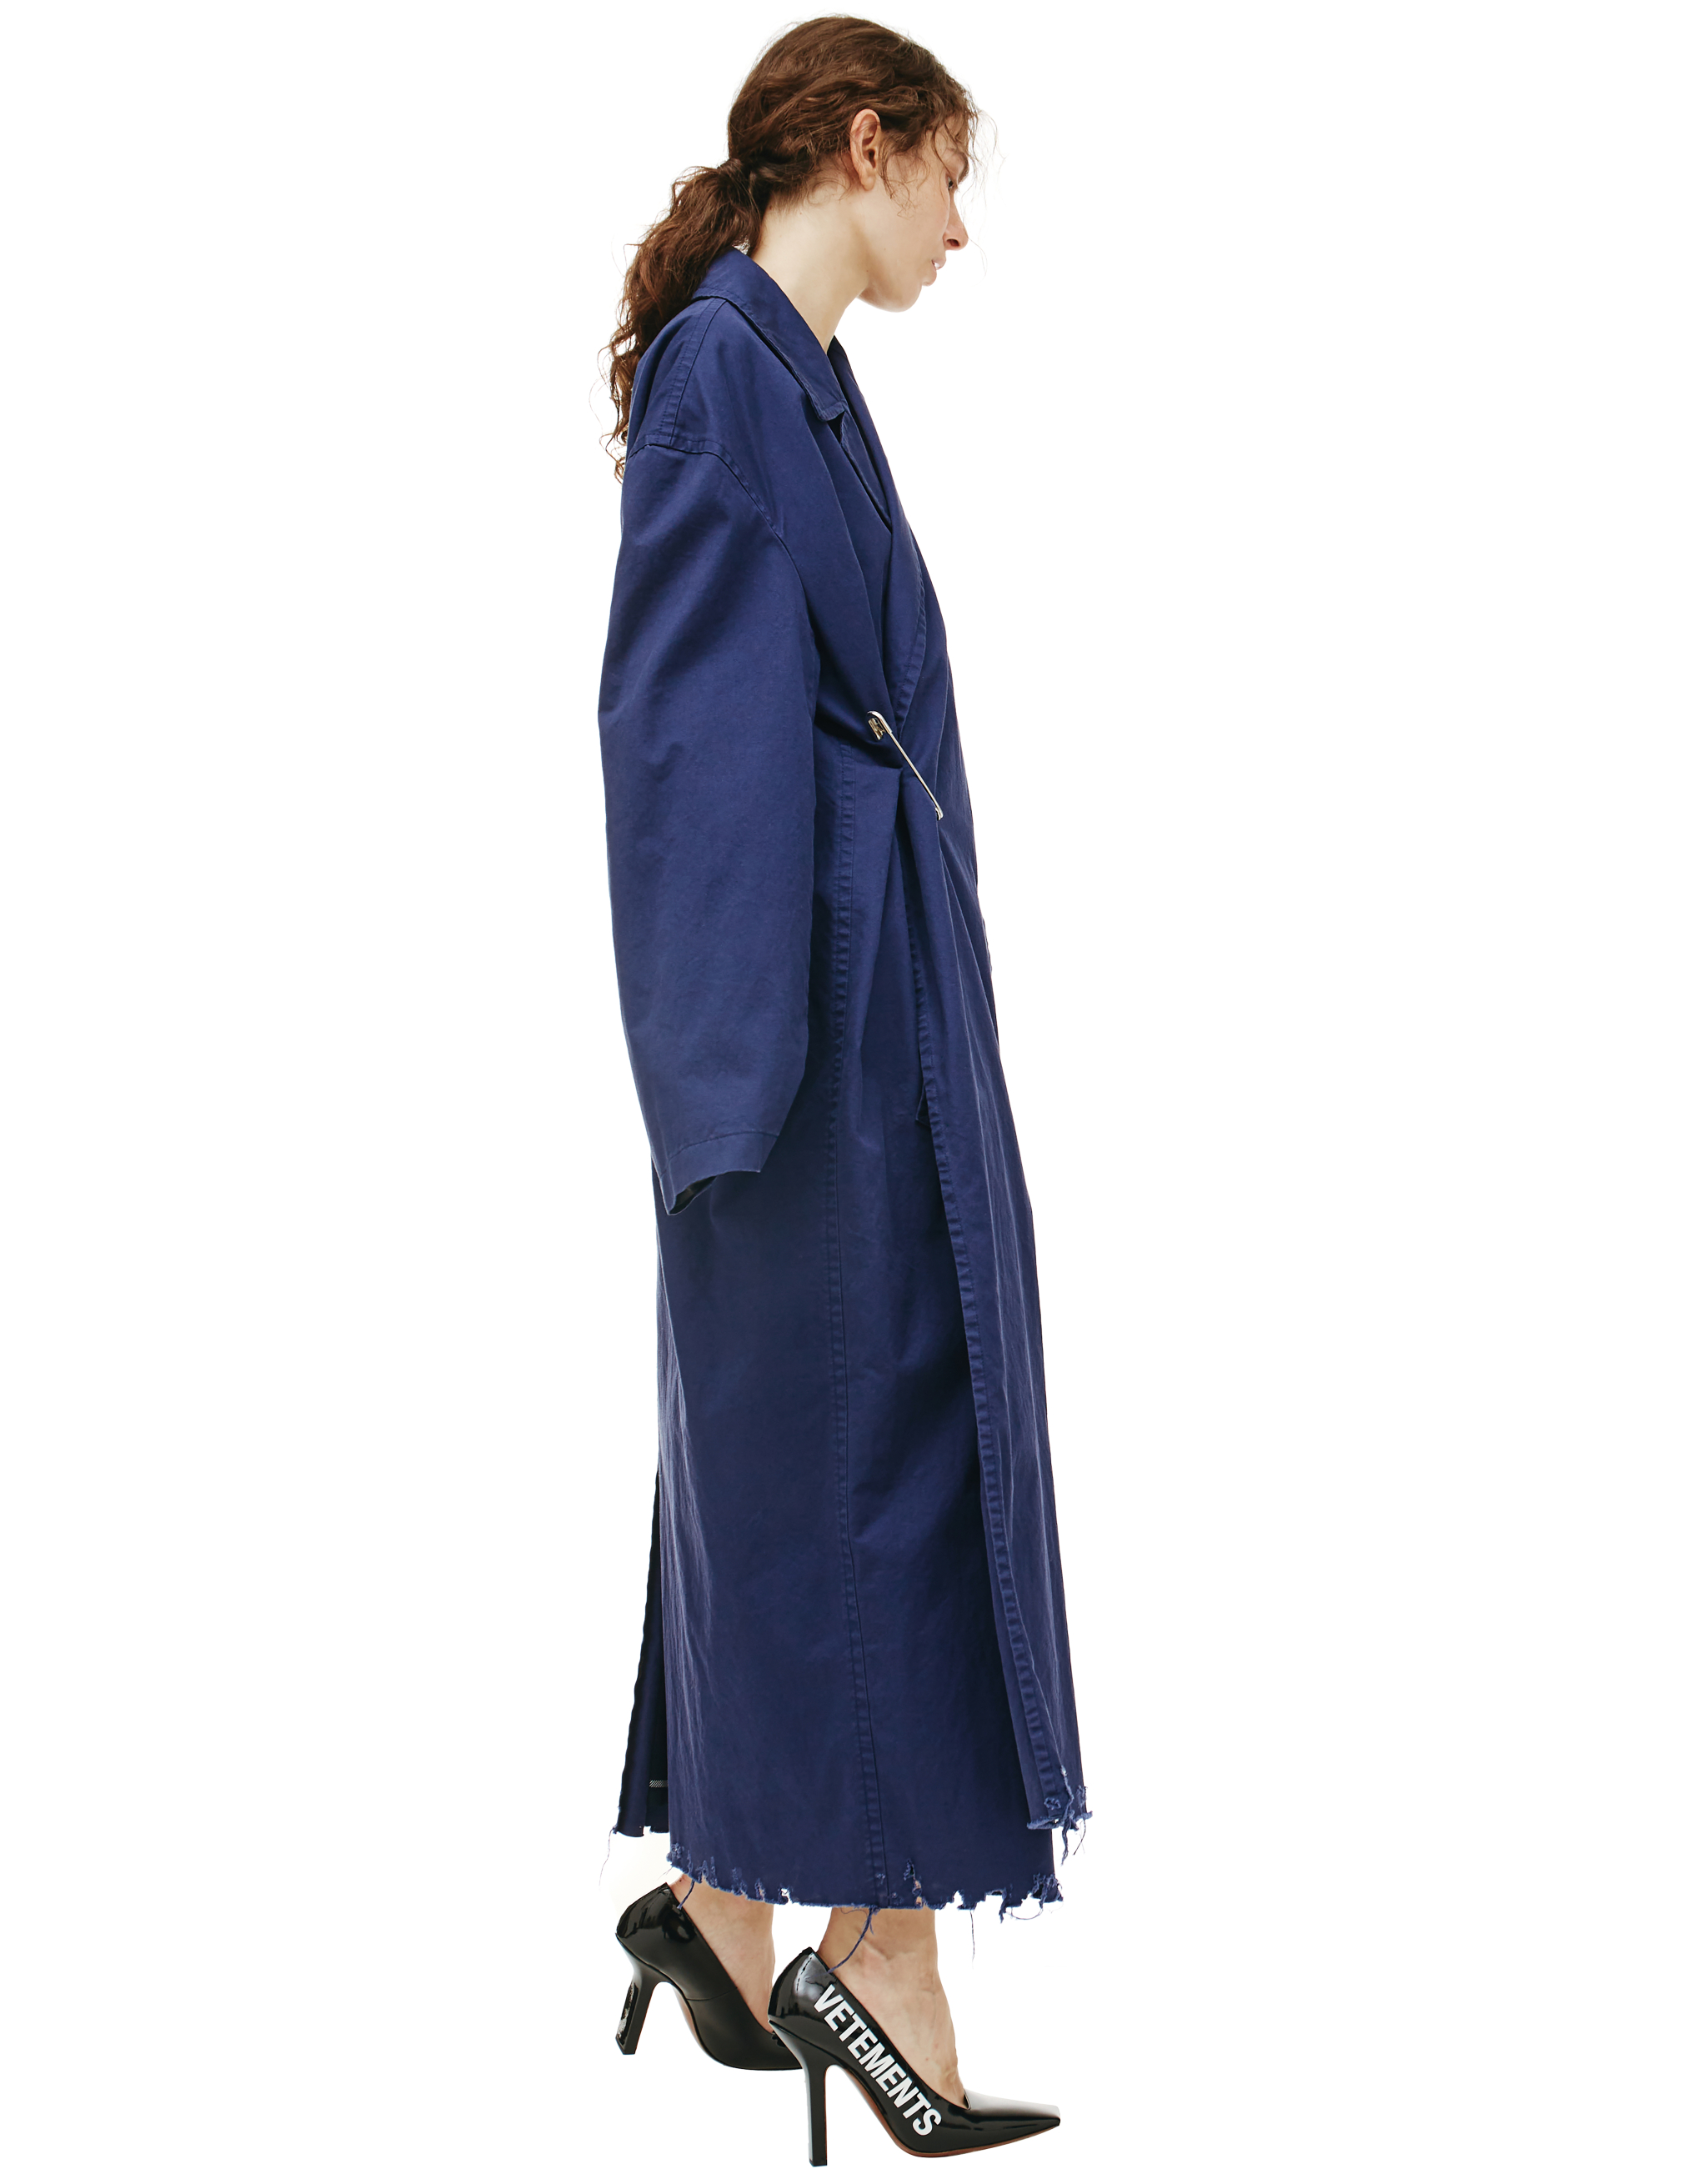 Оверсайз пальто с клетчатым подкладом Balenciaga 681165/TKP06/4140, размер 3 681165/TKP06/4140 - фото 2